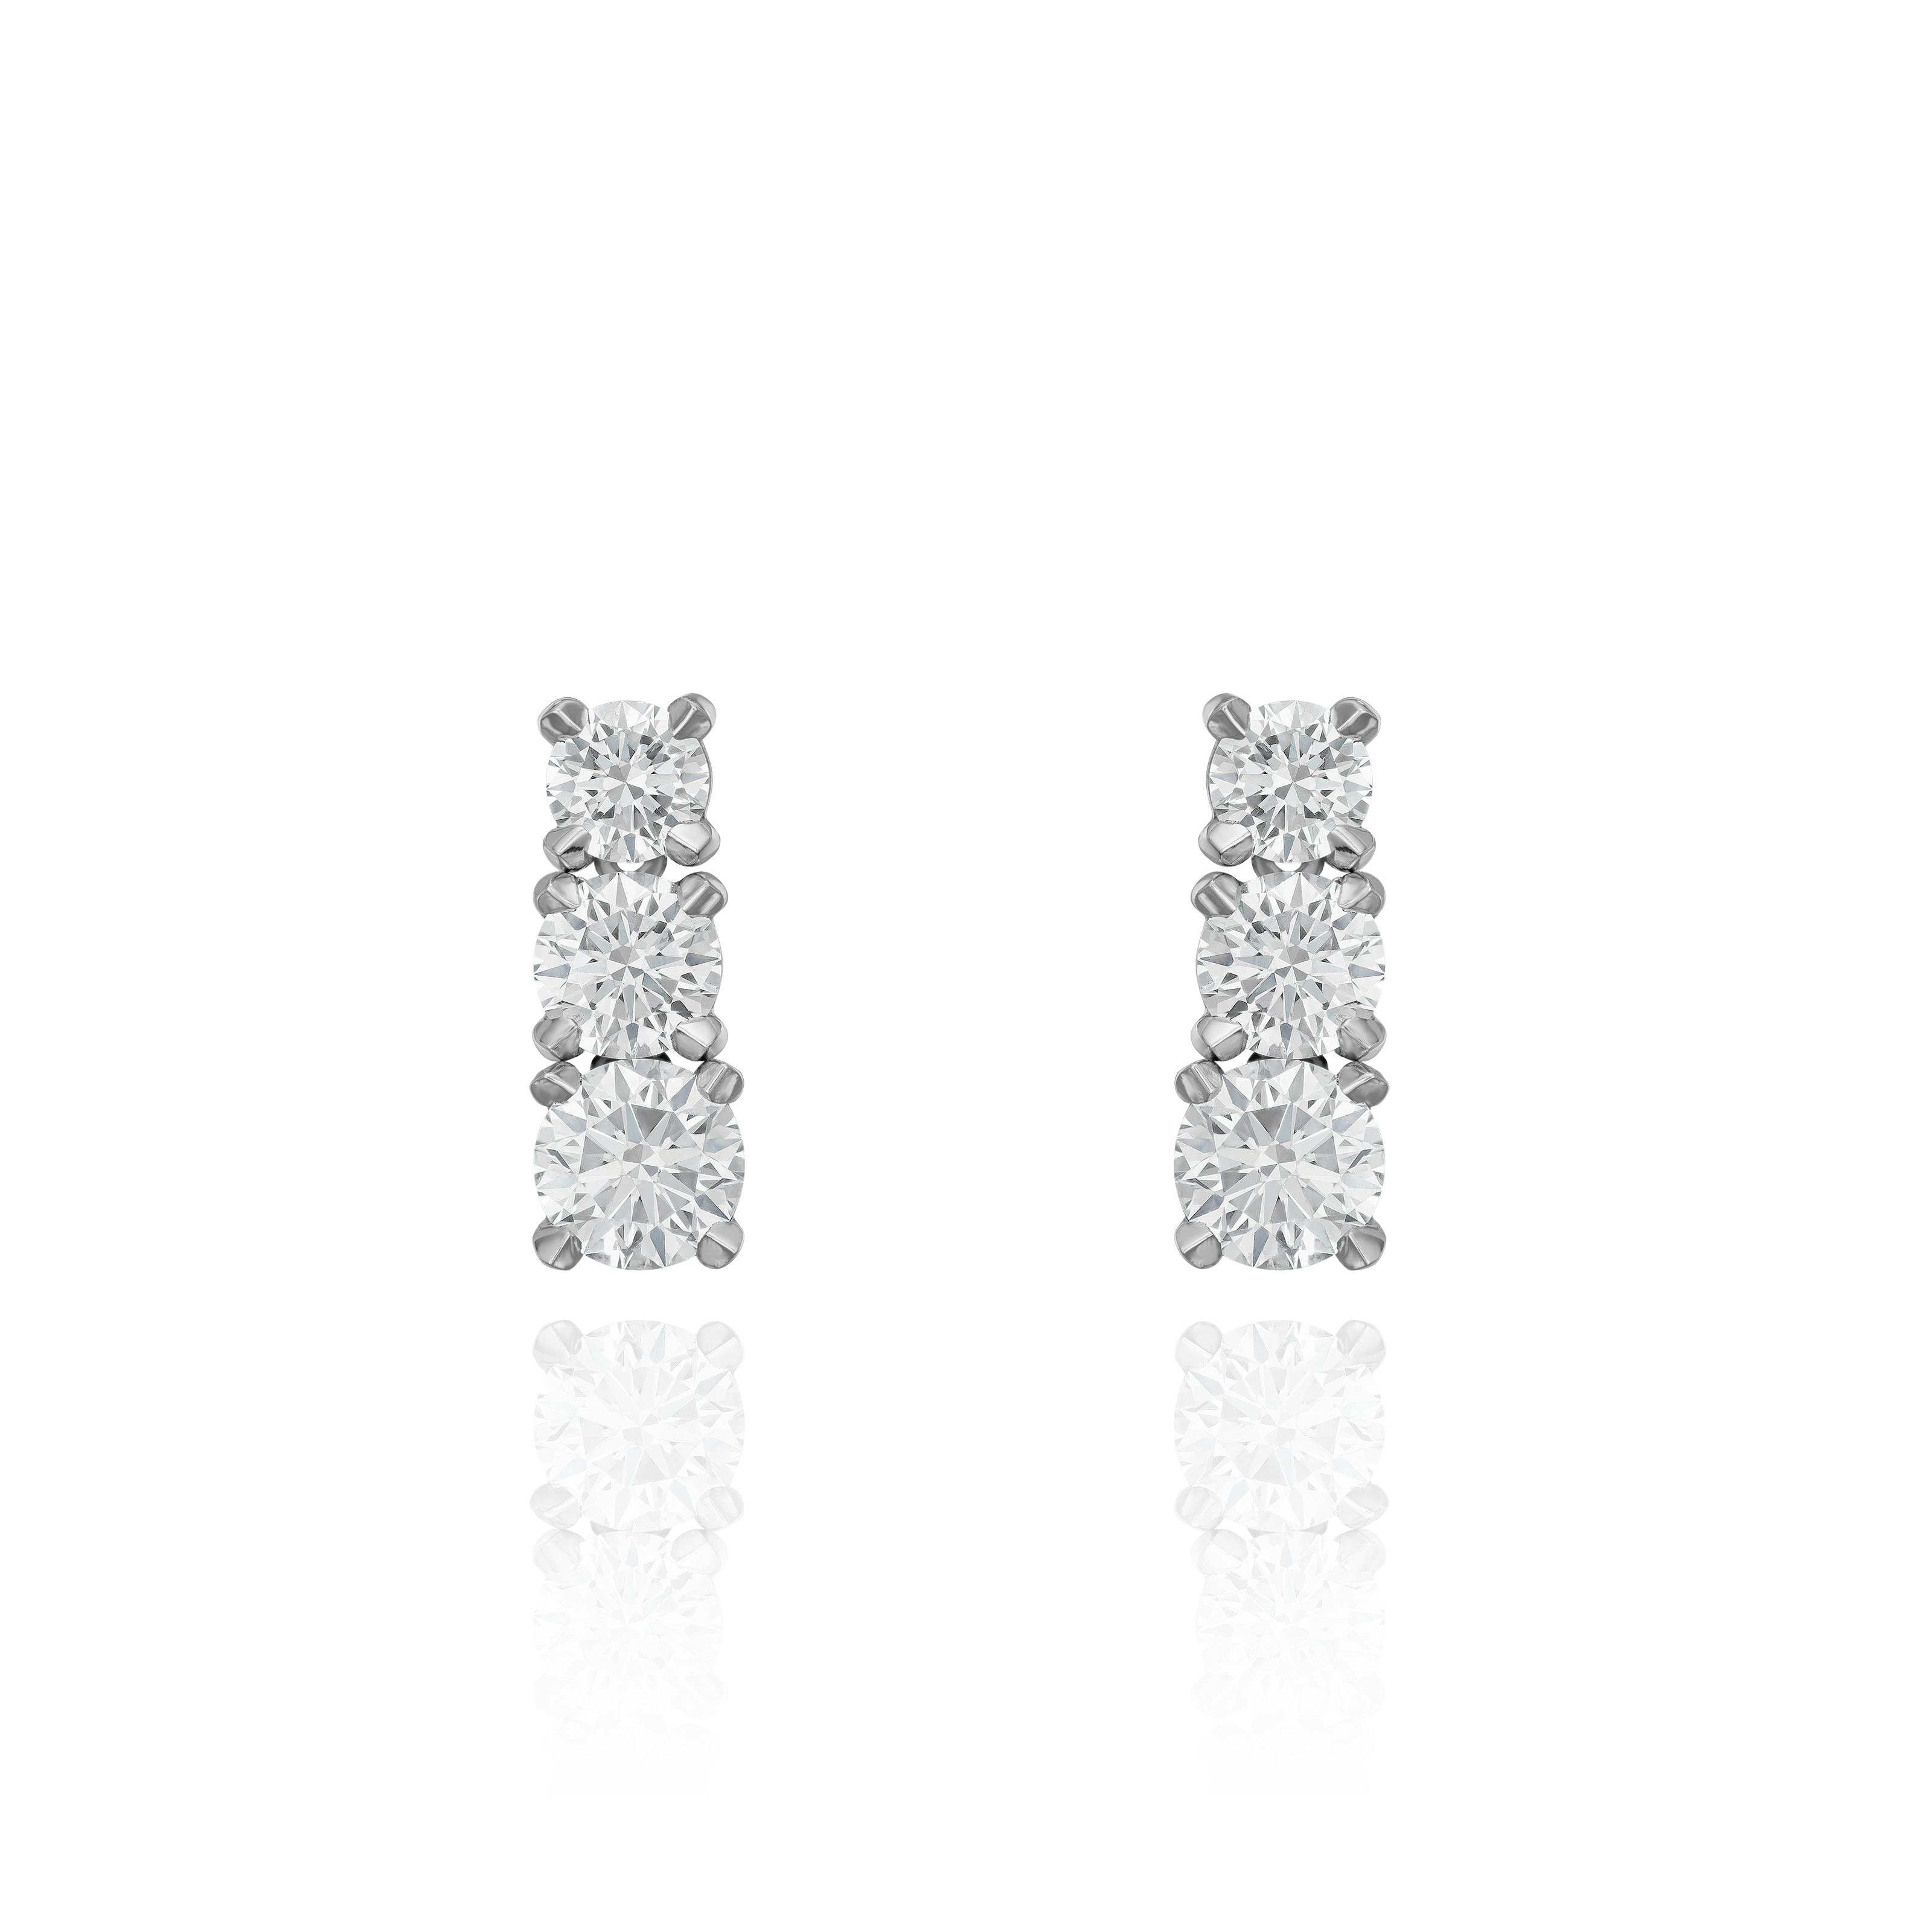 1.51cts Graduated Diamond Drop Earrings